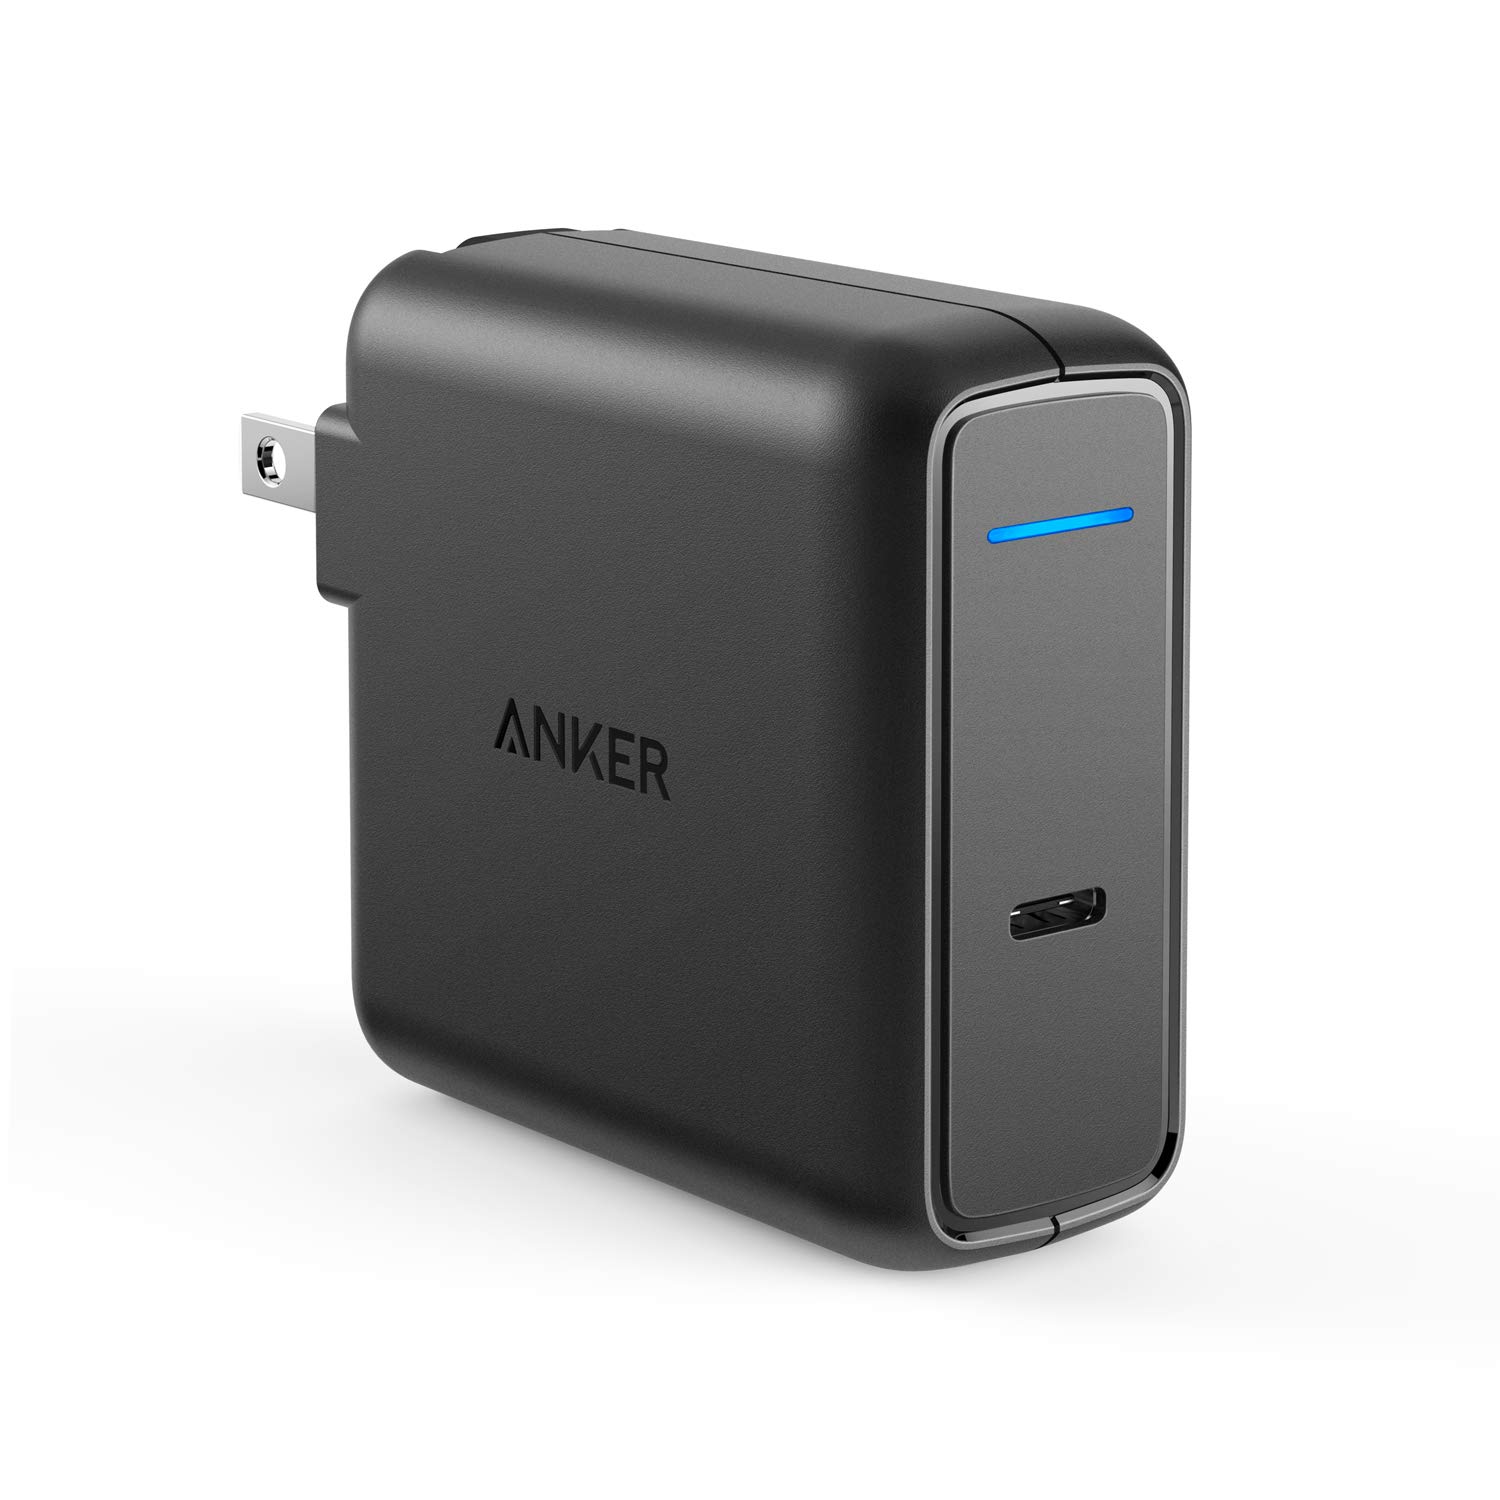 Anker、1ポートで60W出力可能なPD対応USB-C充電器｢PowerPort Speed 1 PD 60｣を発売 − 初回300個限定で20％オフに